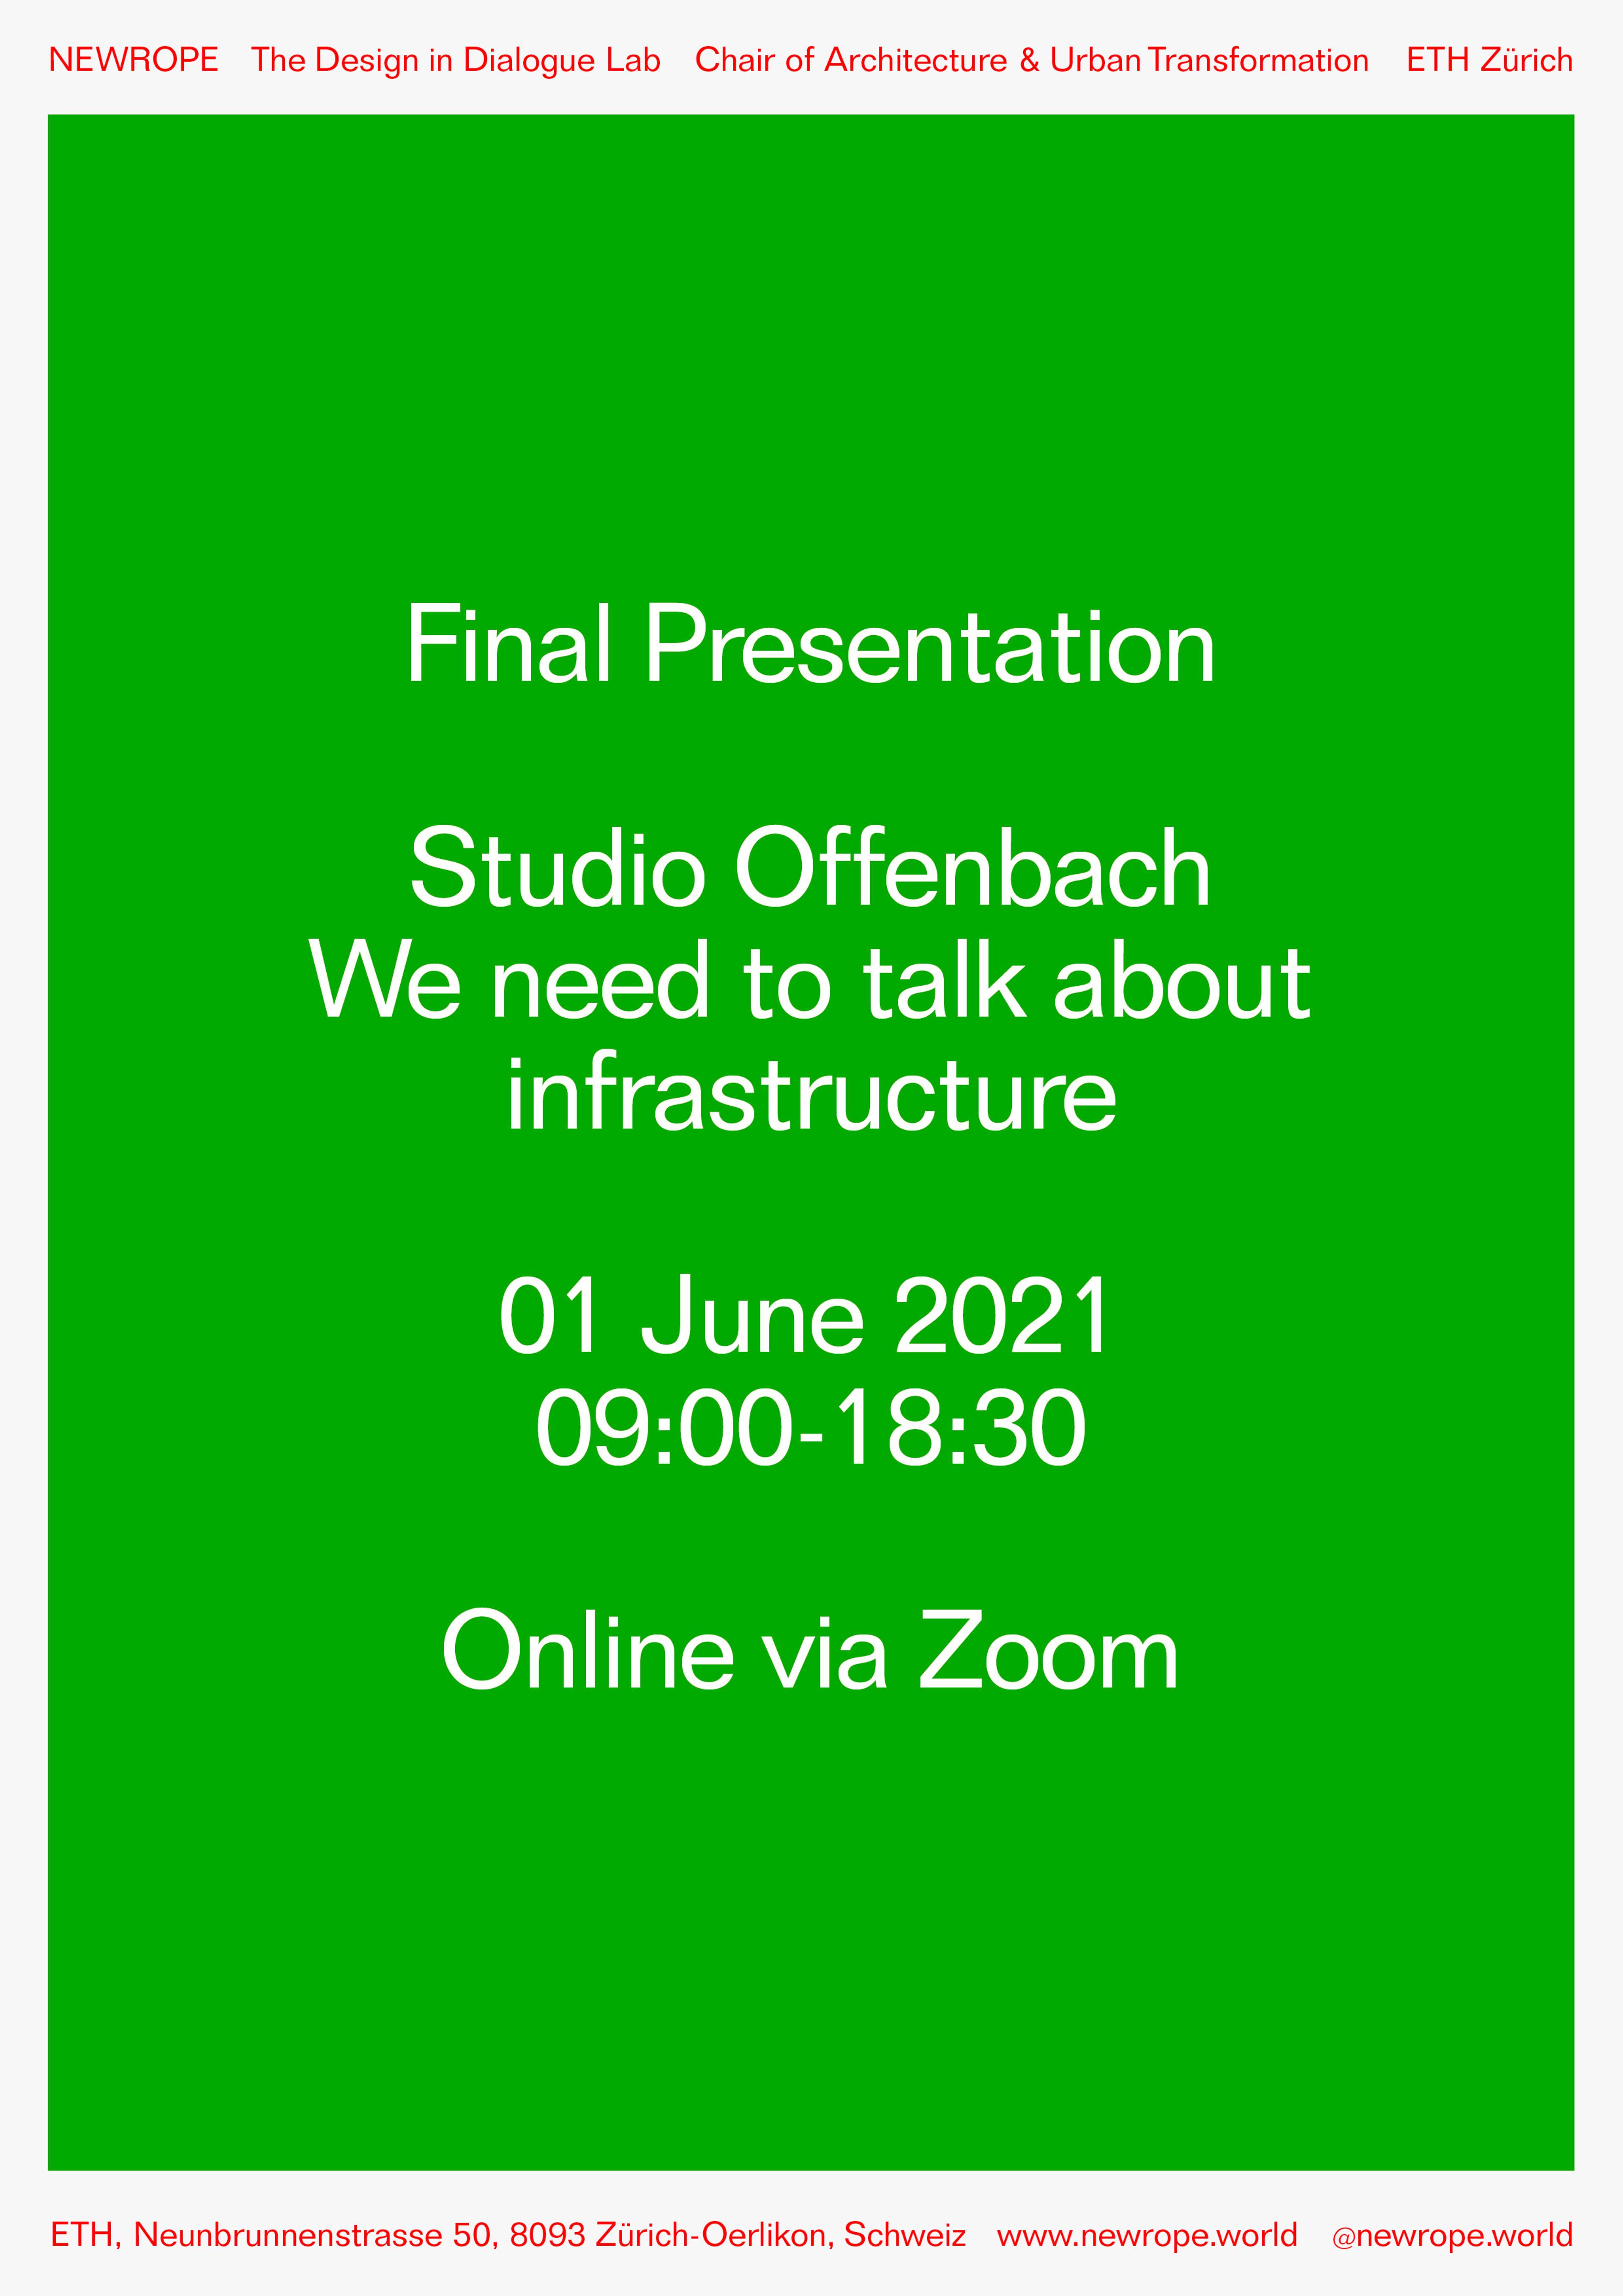 Announcement: Final Presentation Studio Offenbach